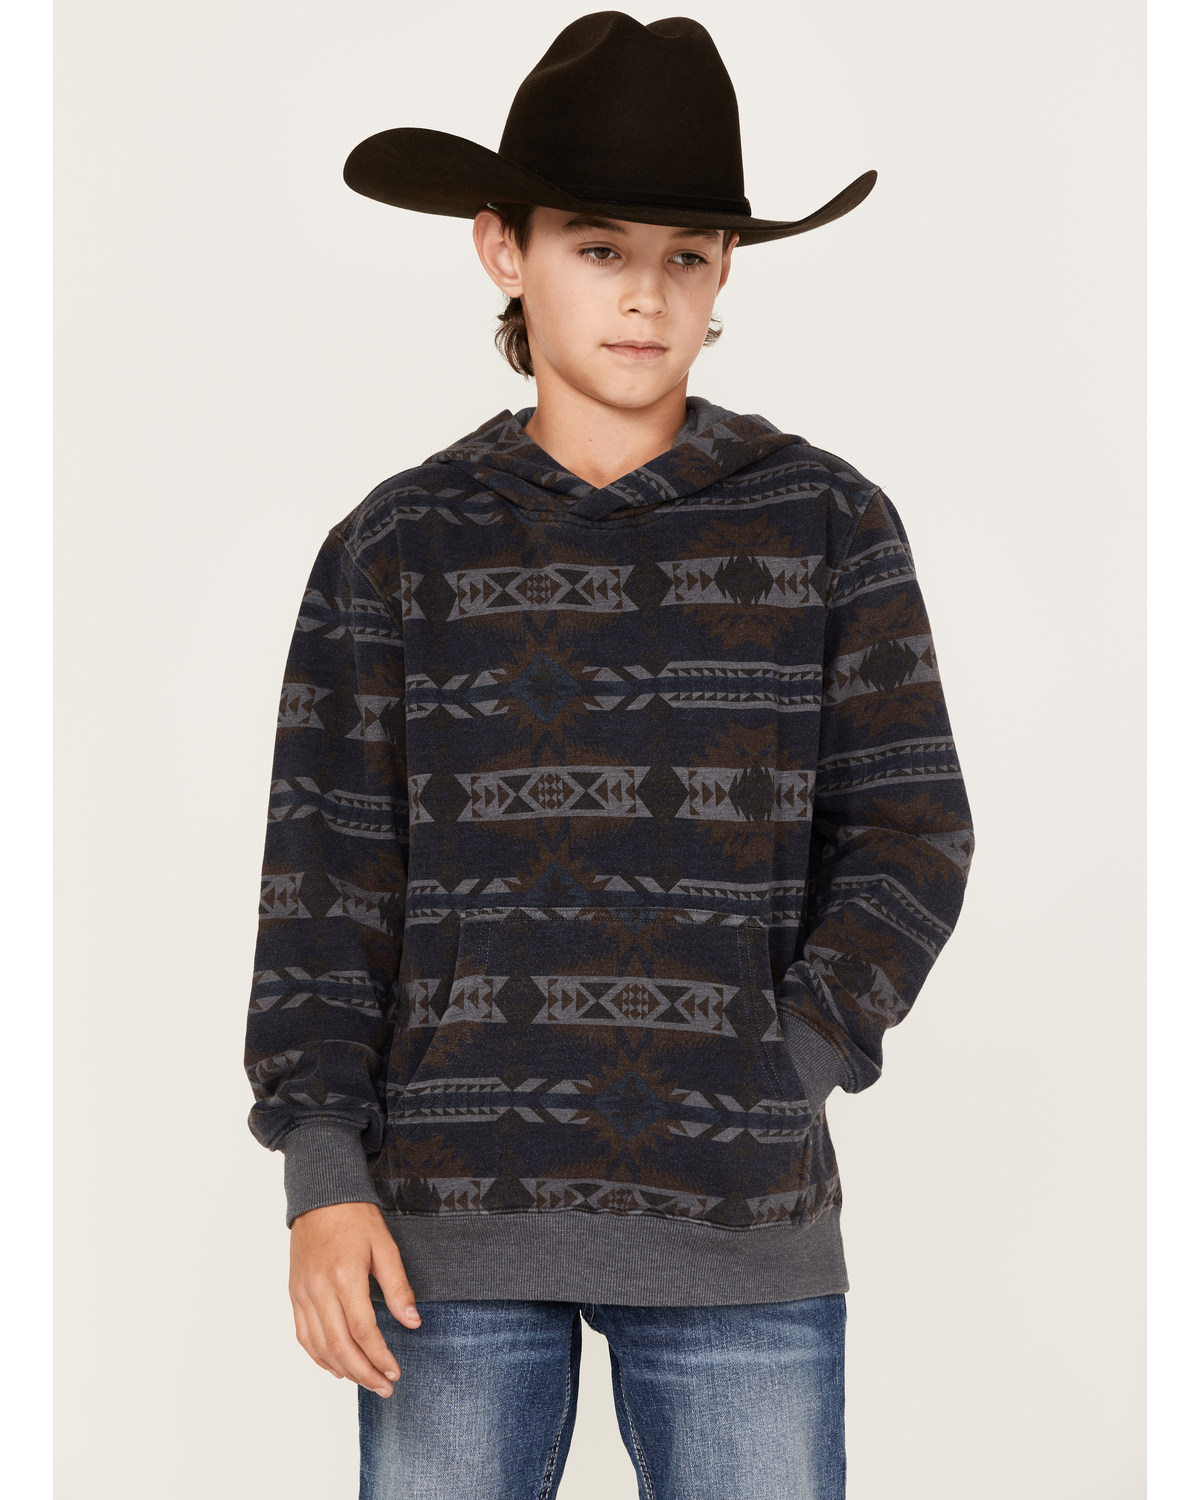 Ariat Boys' Southwestern Print Hooded Sweatshirt